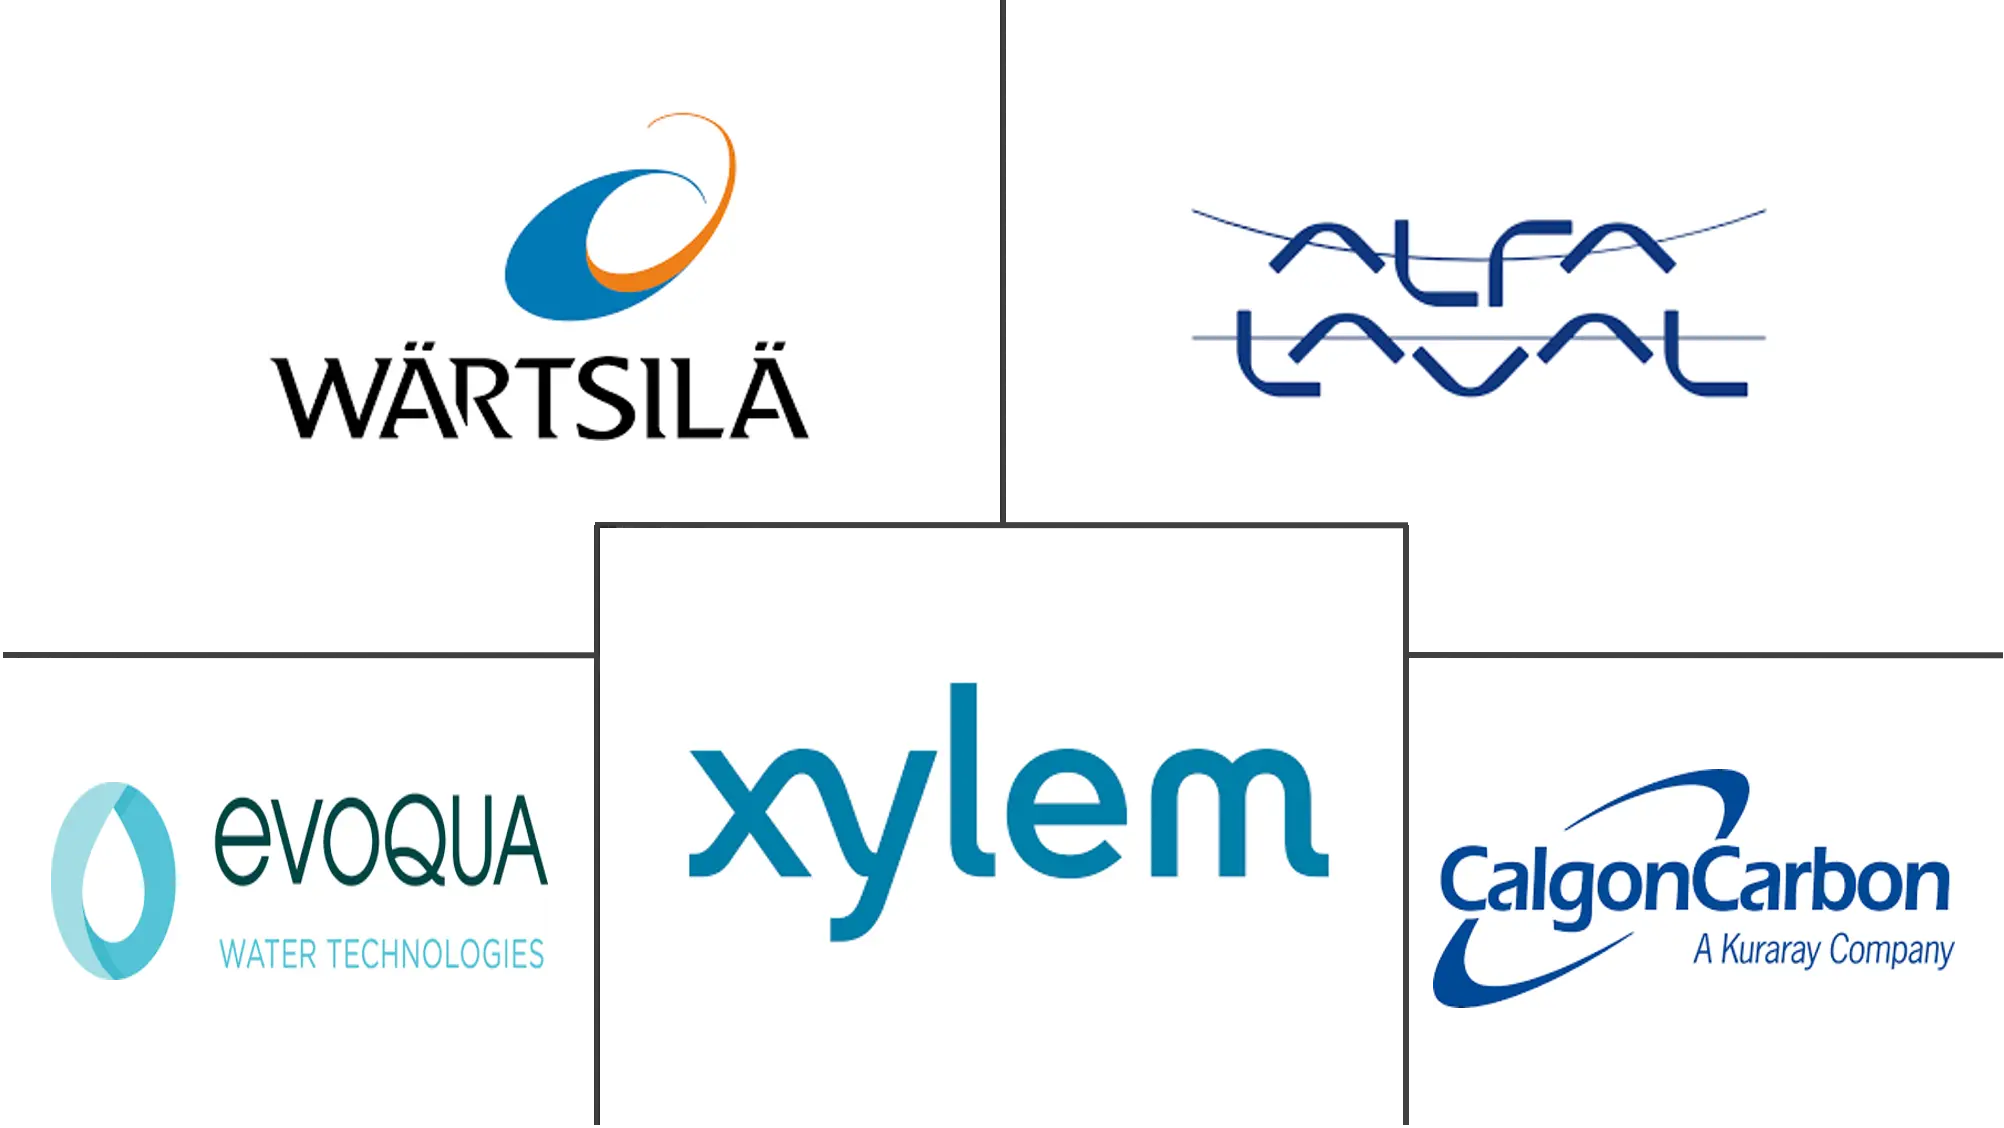 Ballast Water Treatment Market Companies